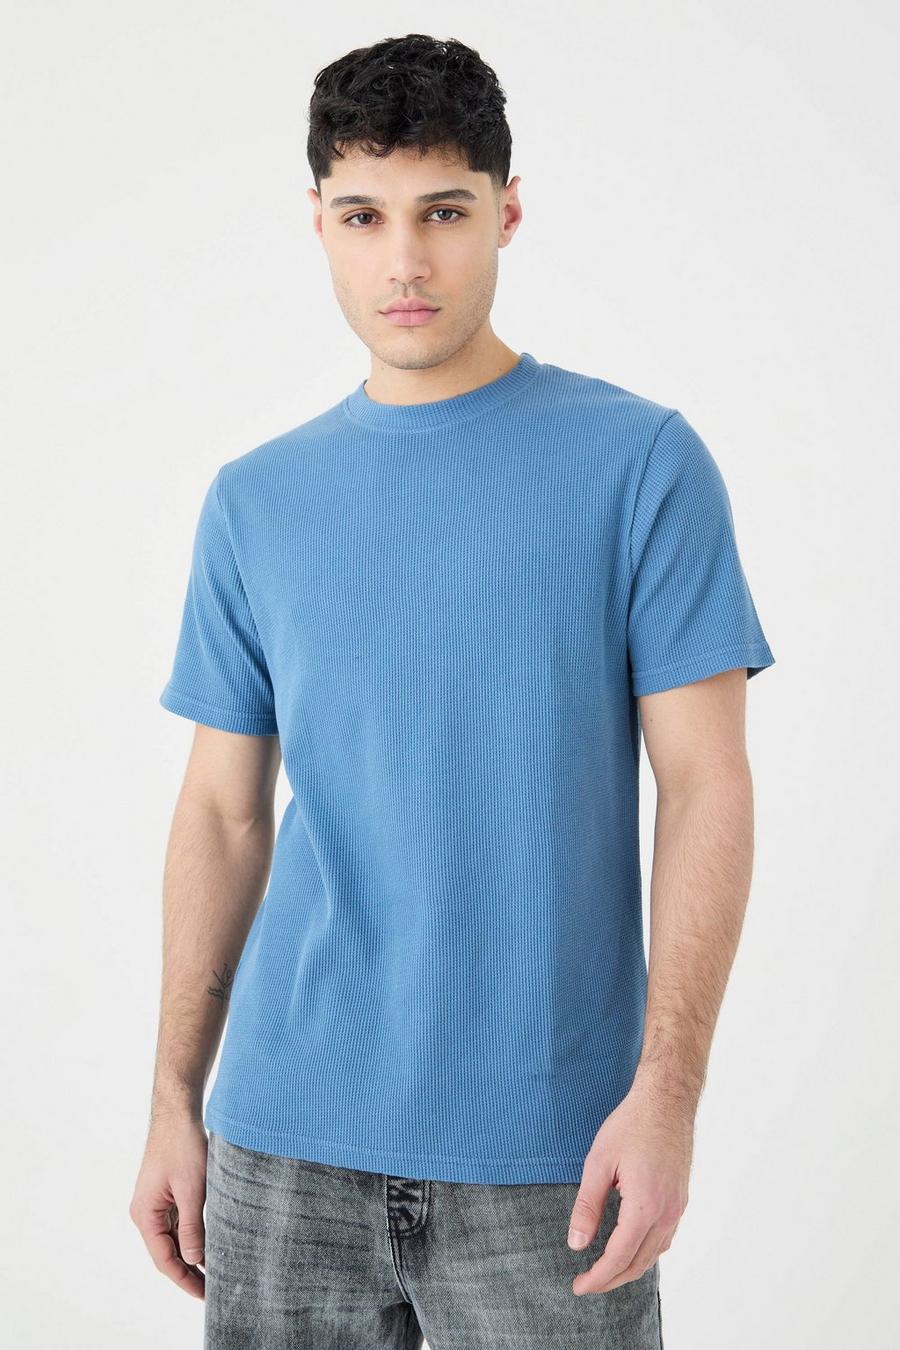 T-shirt Slim Fit con trama a nido d’ape, Slate blue